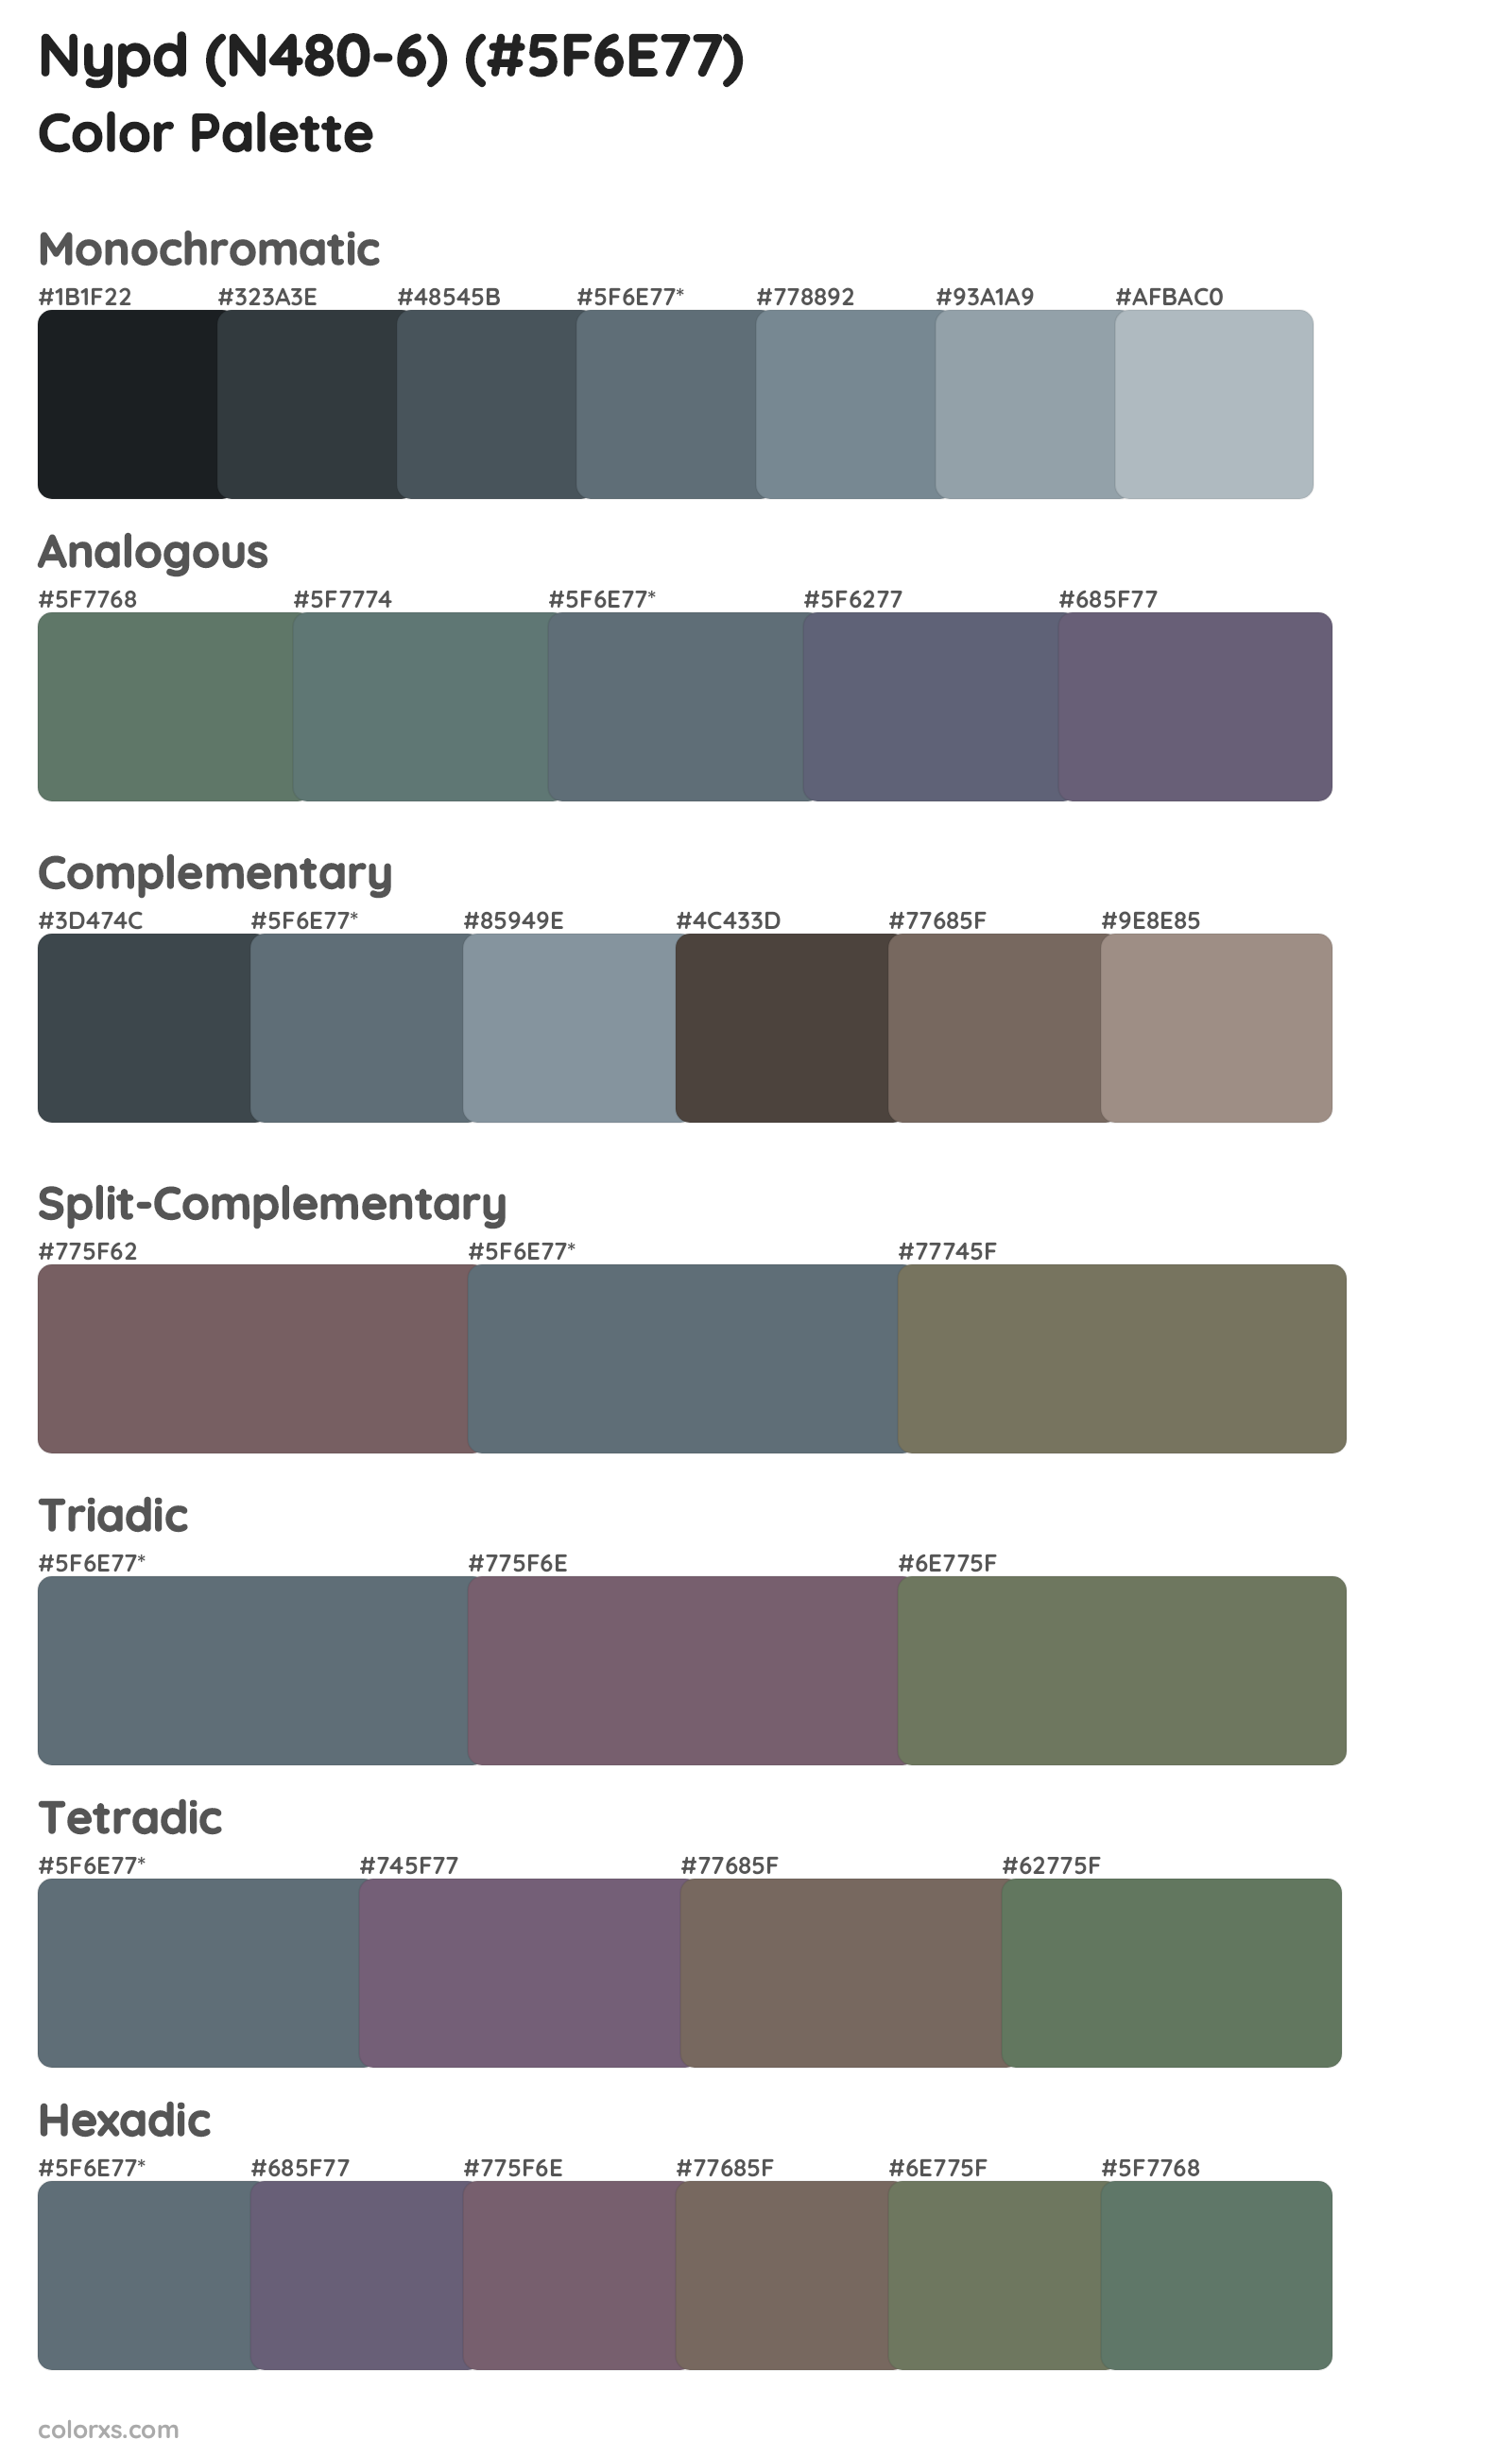 Nypd (N480-6) Color Scheme Palettes